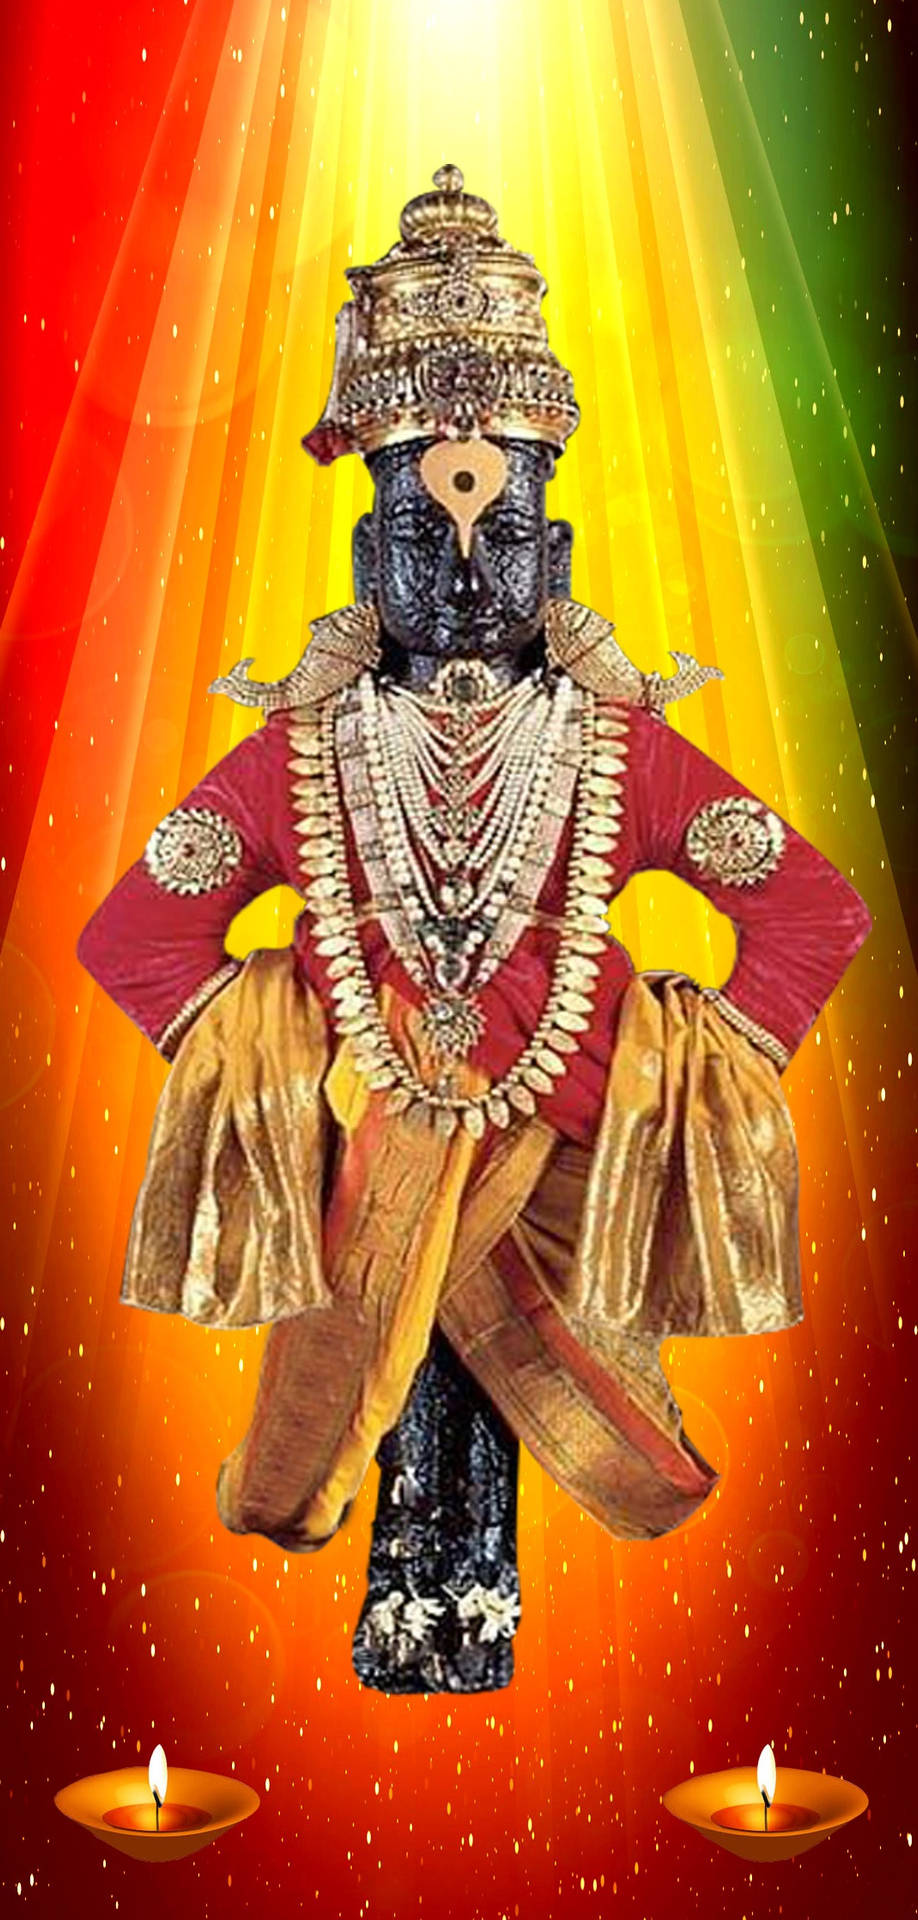 Caption: Devotion In Vision: Ancient Hindu Deity, Lord Pandurang